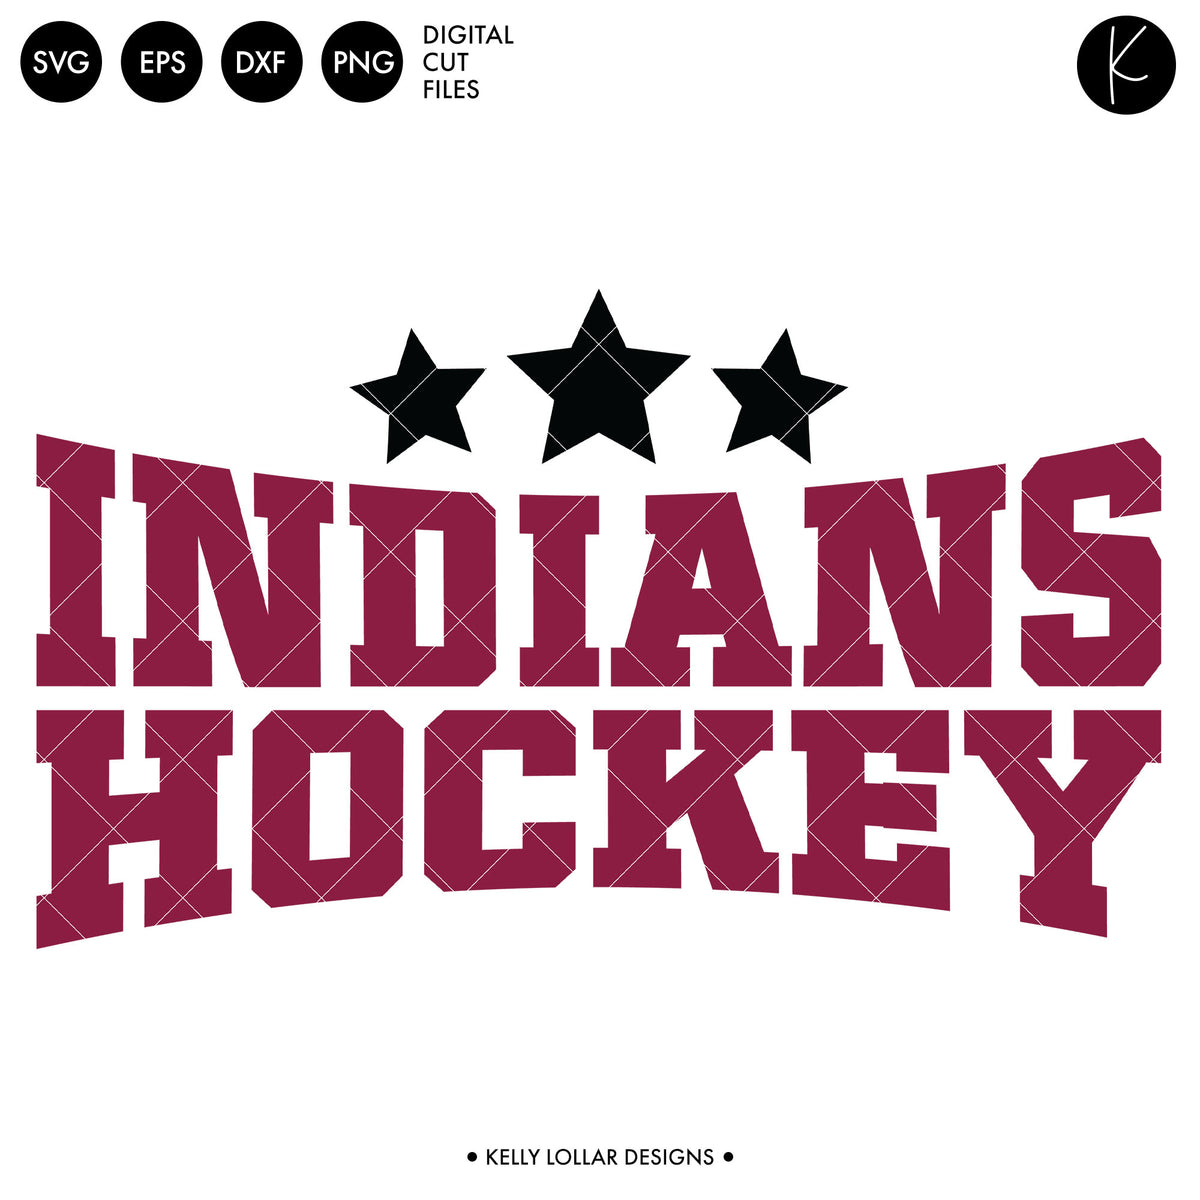 Indians Hockey Bundle | SVG DXF EPS PNG Cut Files